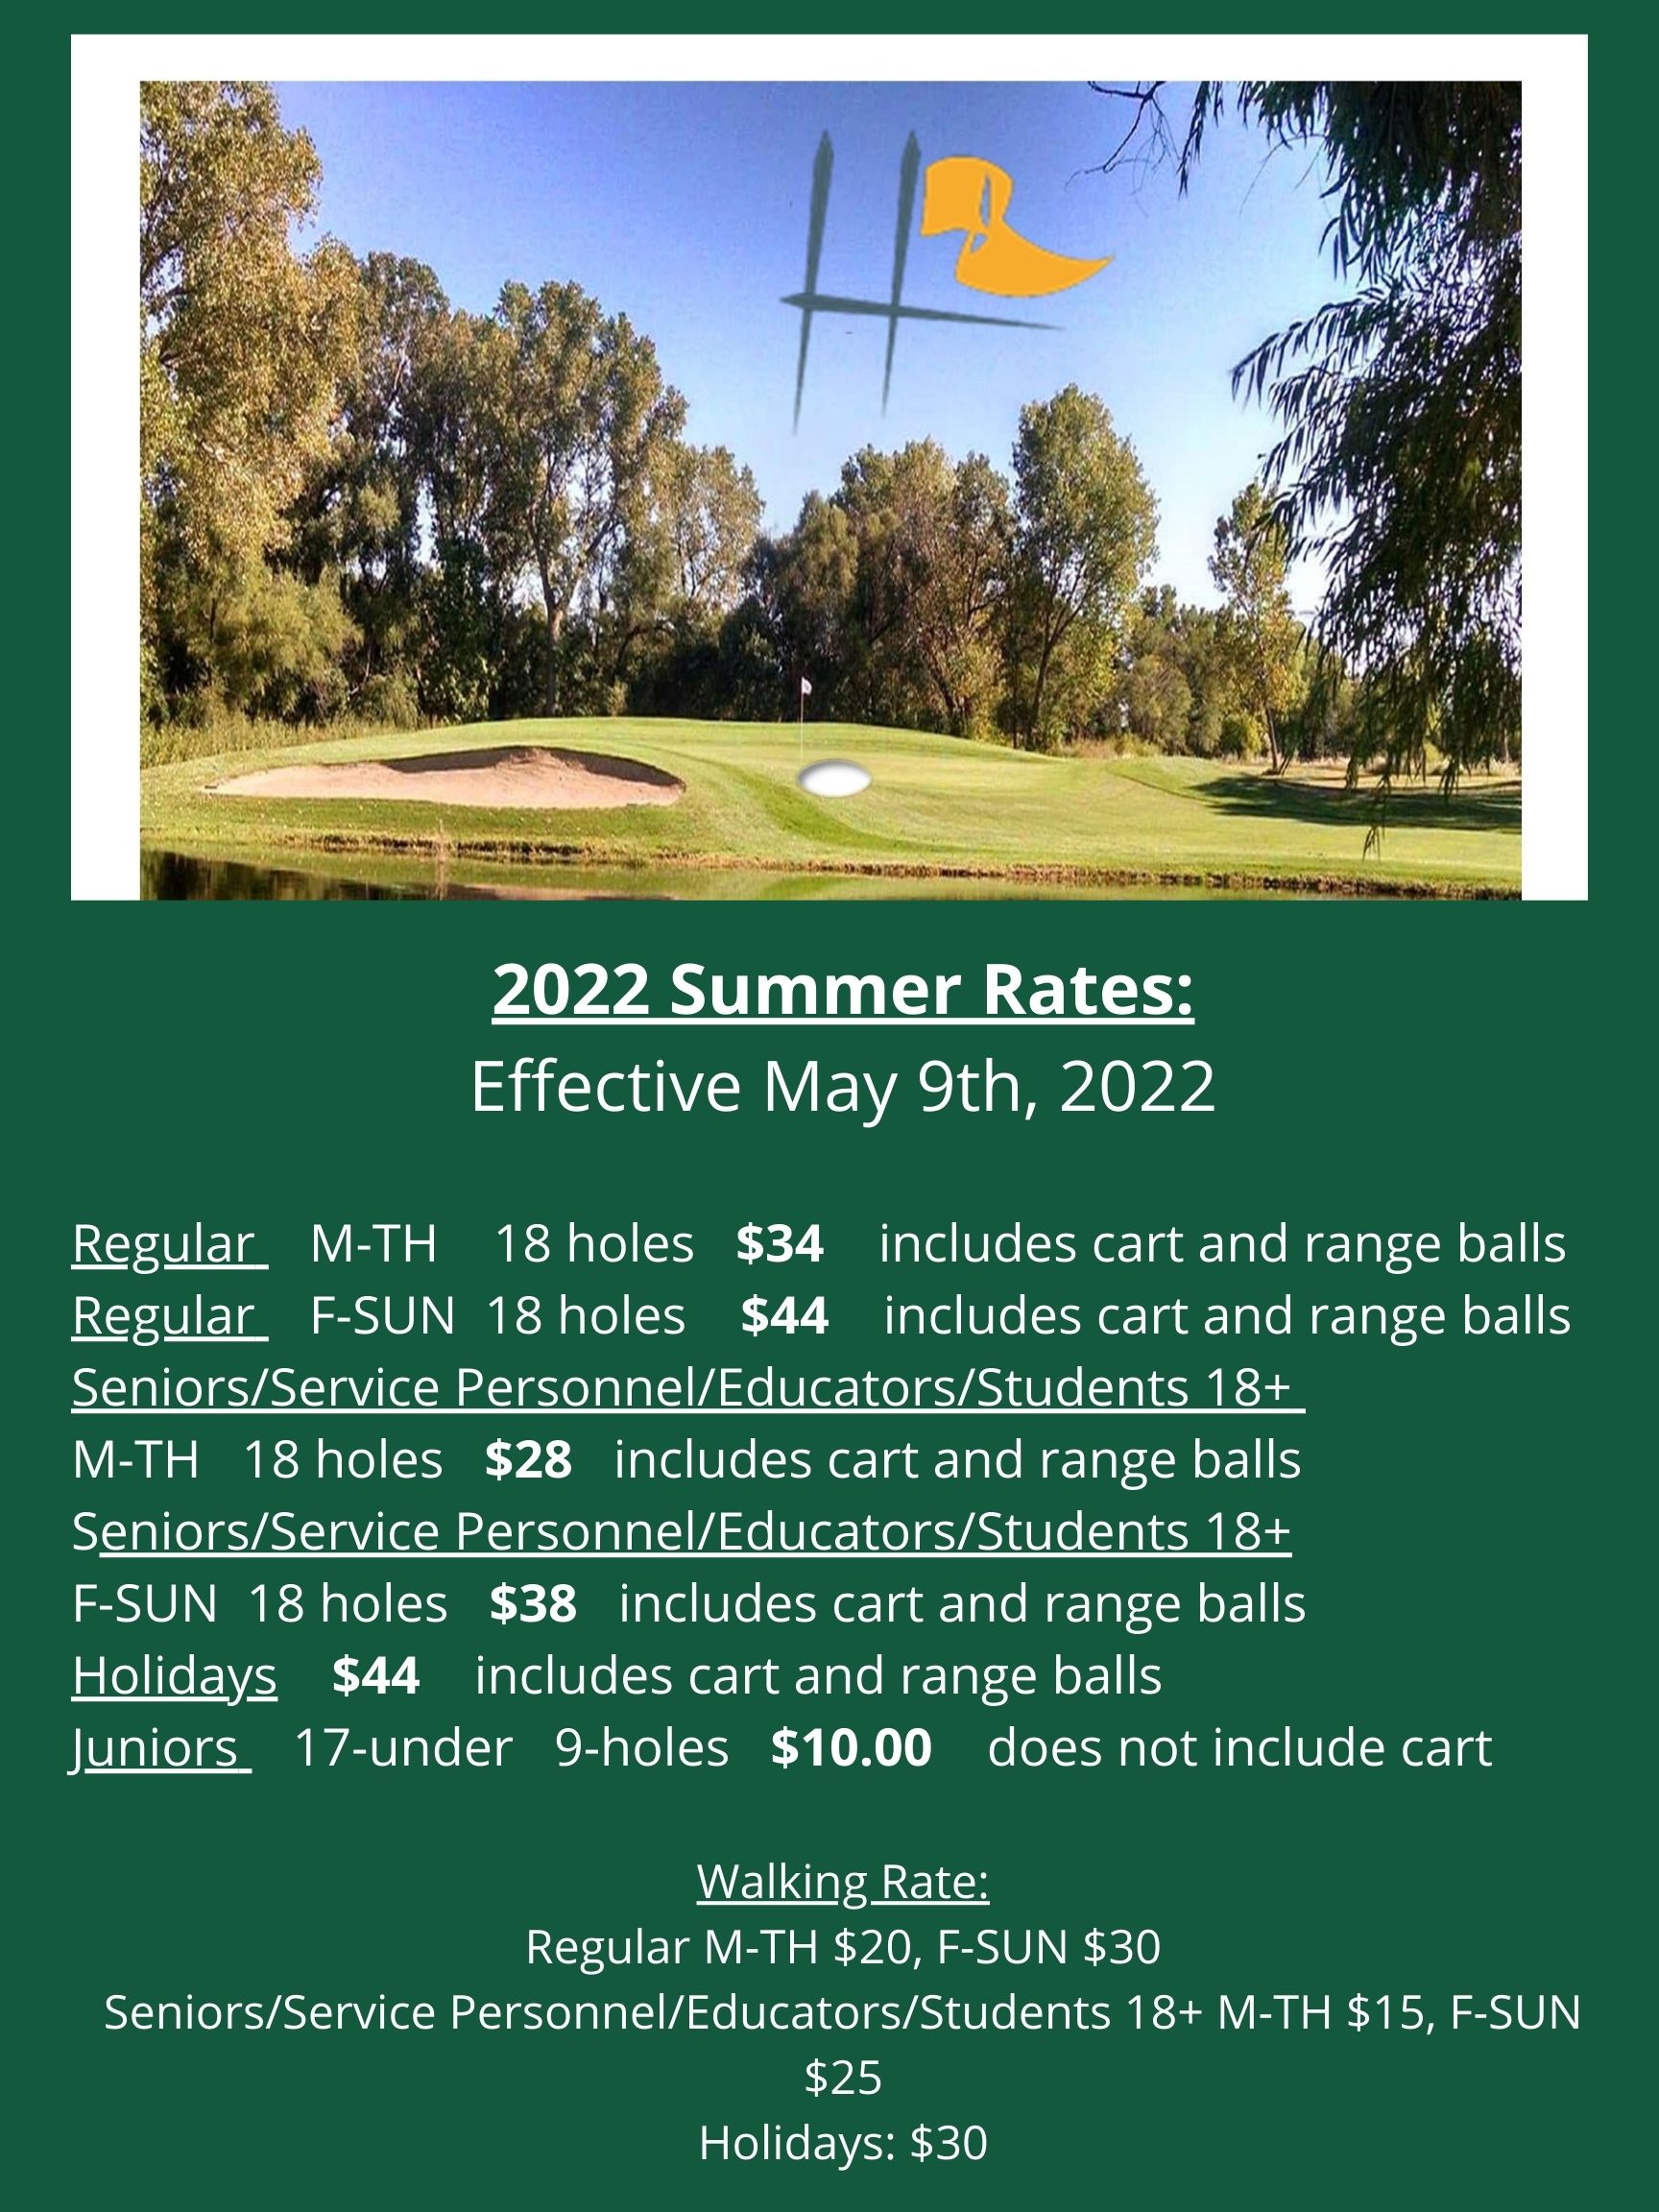 Hesston GOlf COurse 2022 Summer Rates